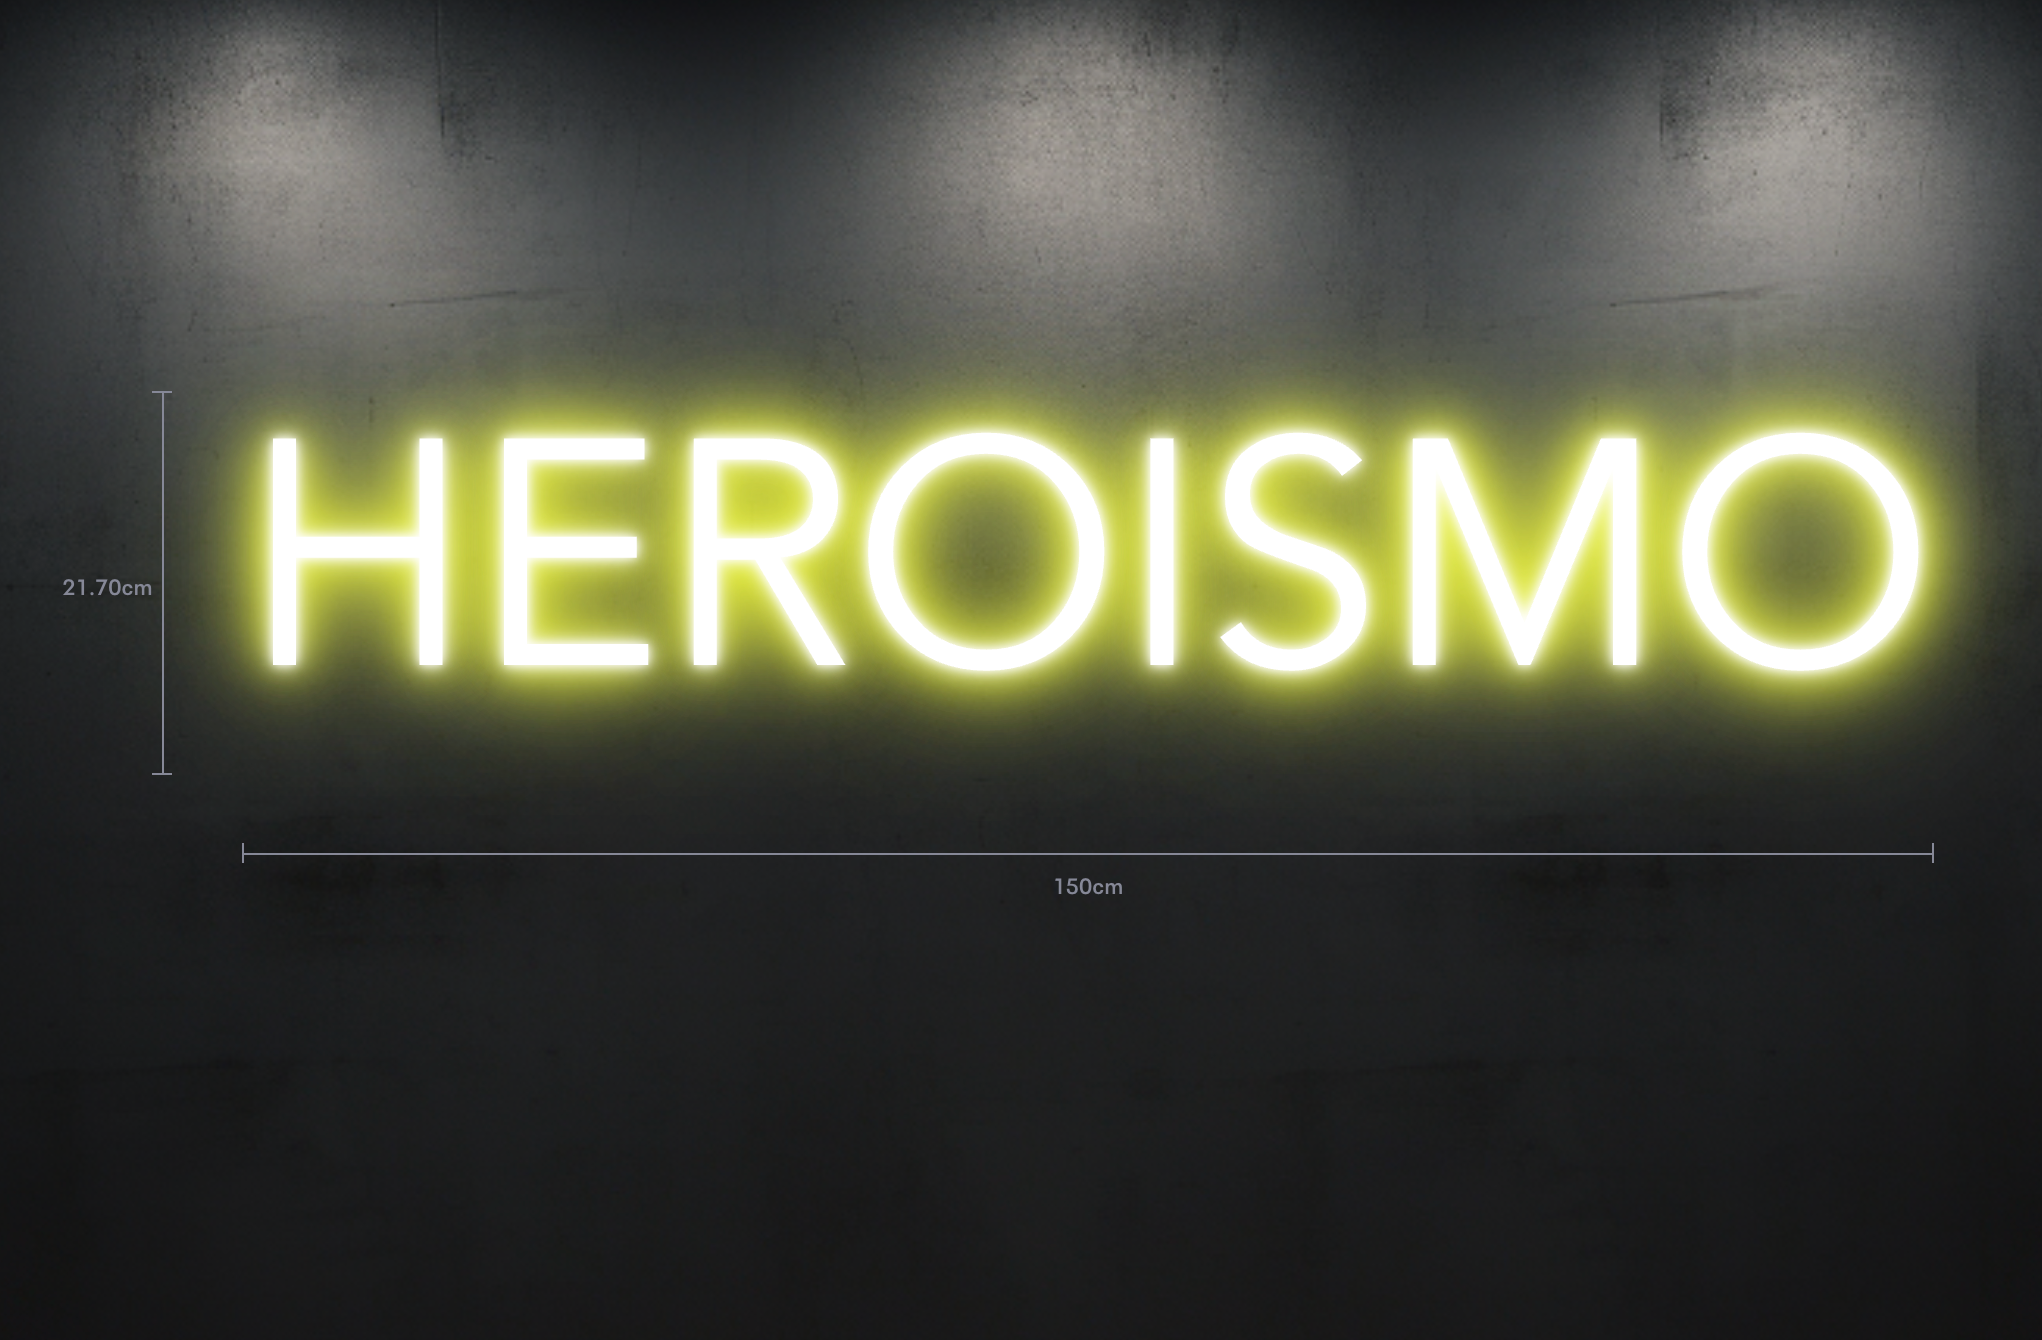 Heroismo - Néon LED